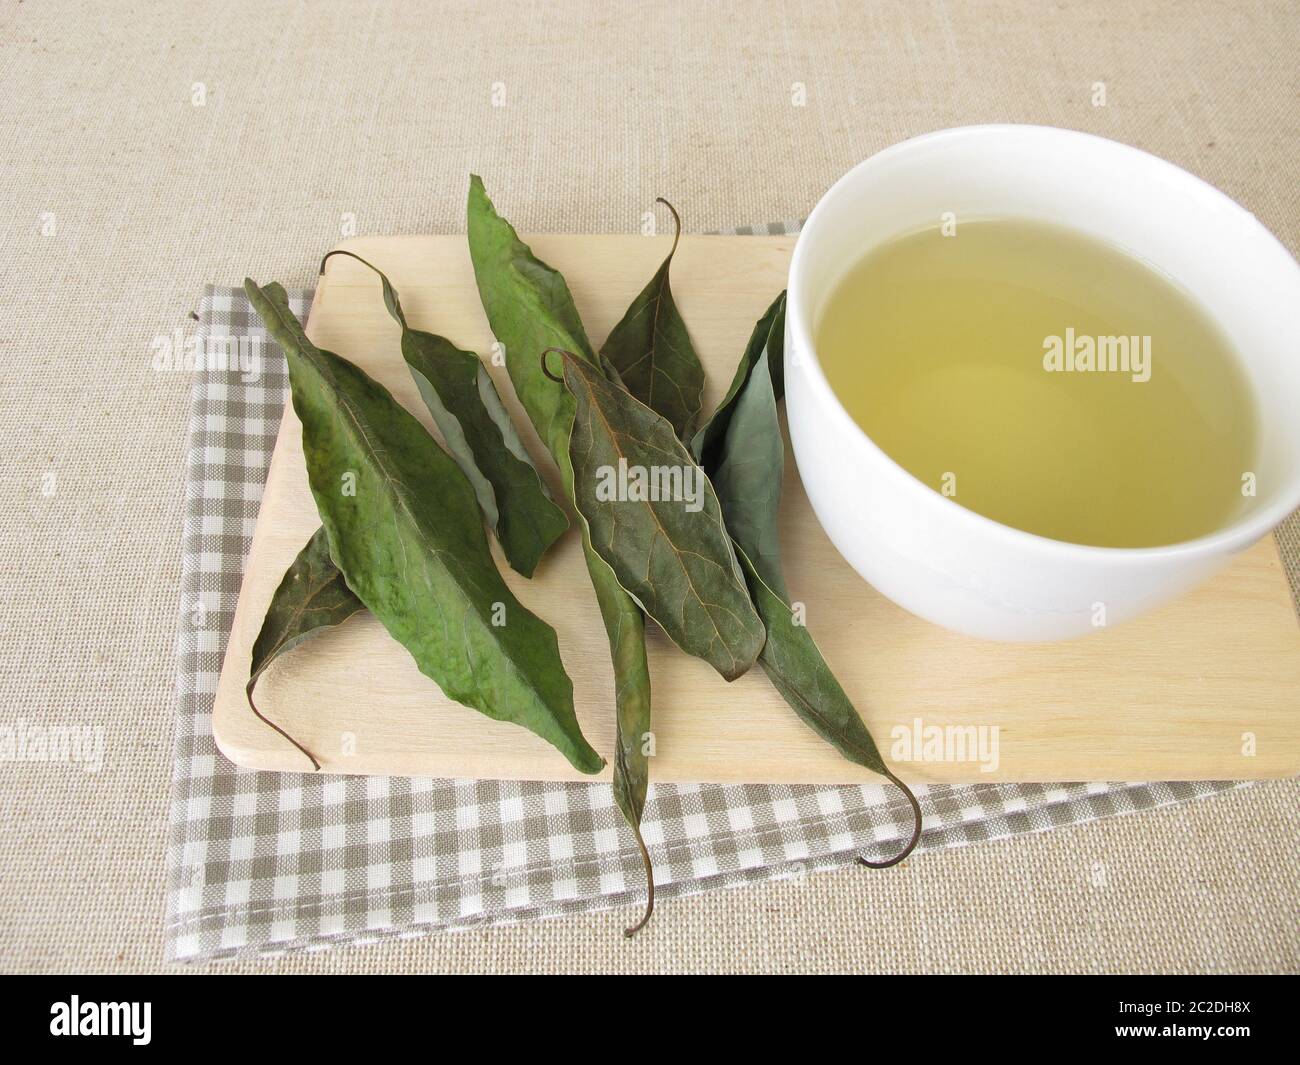 Eine Tasse Avocado-Blatt-Tee, Tee mit getrockneten Avocado-Blättern  Stockfotografie - Alamy